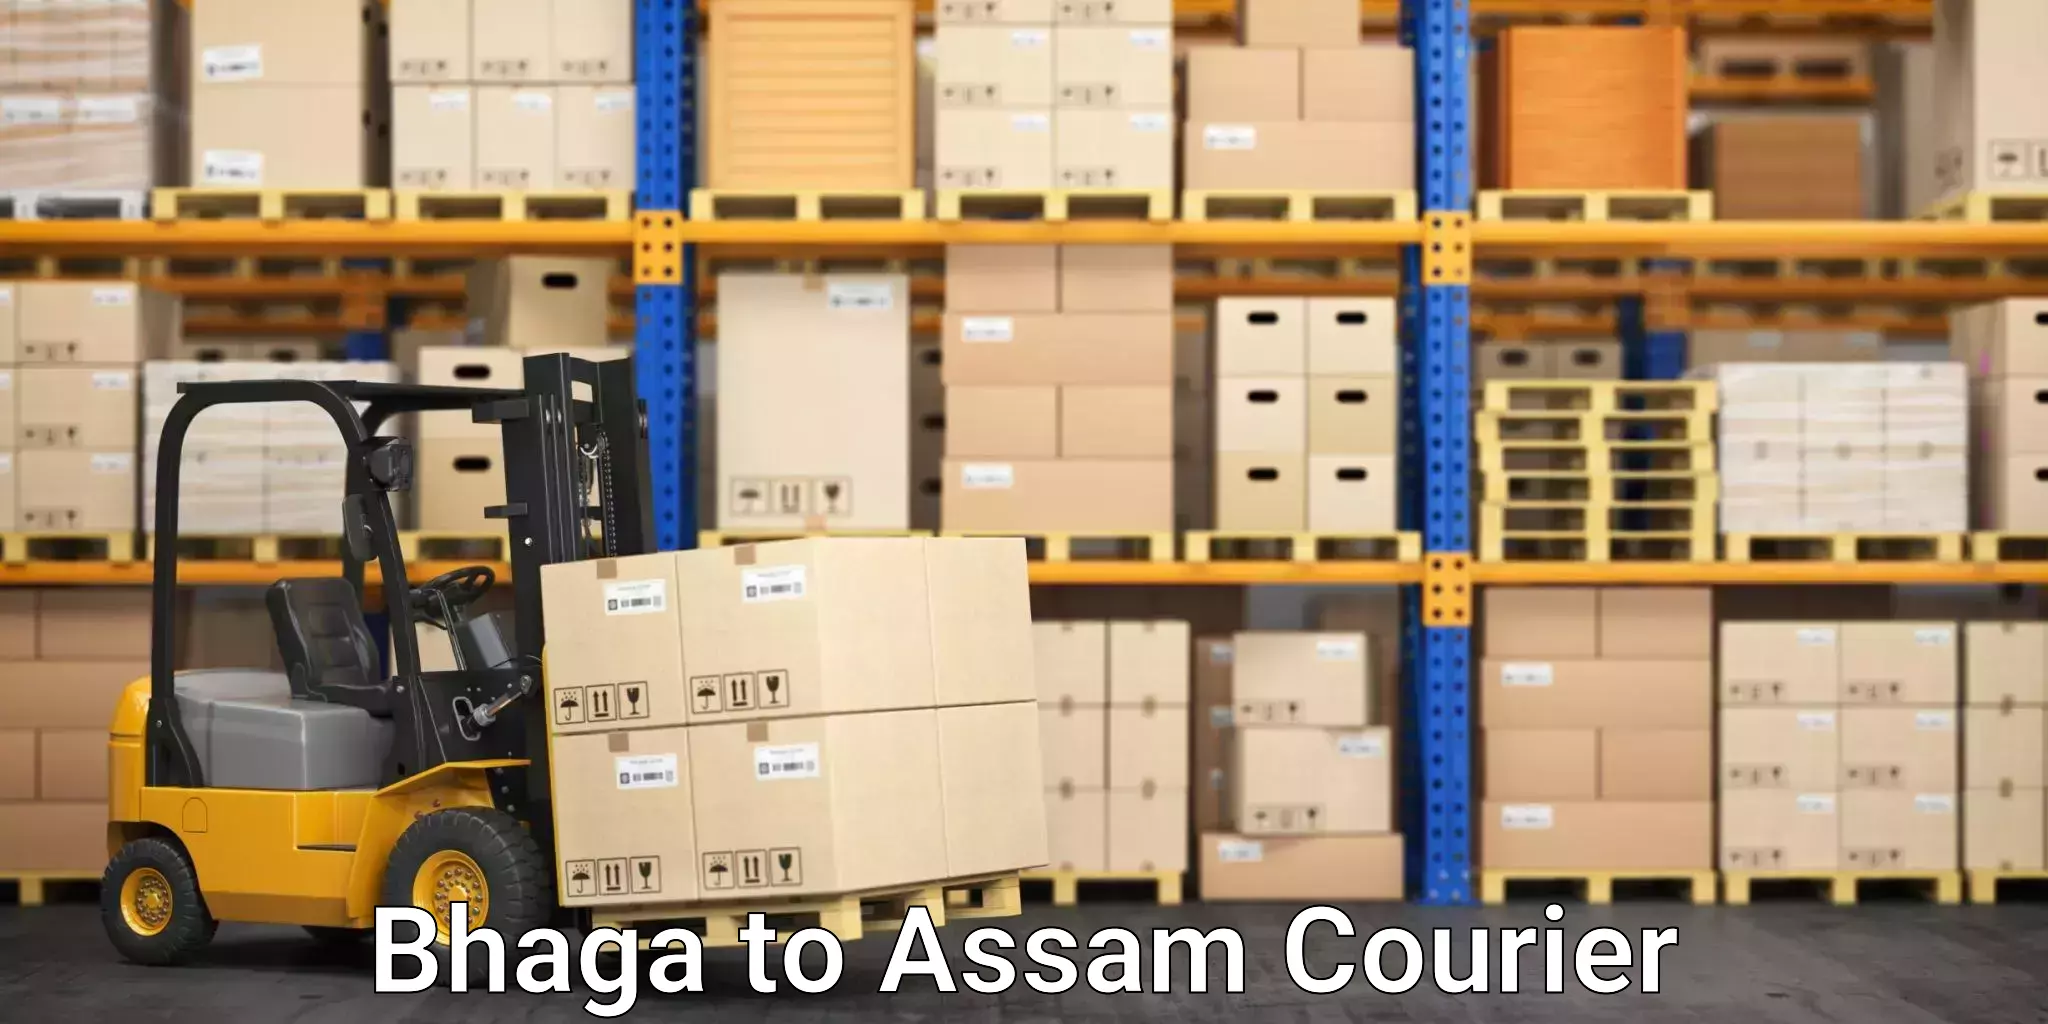 Express mail service Bhaga to Assam